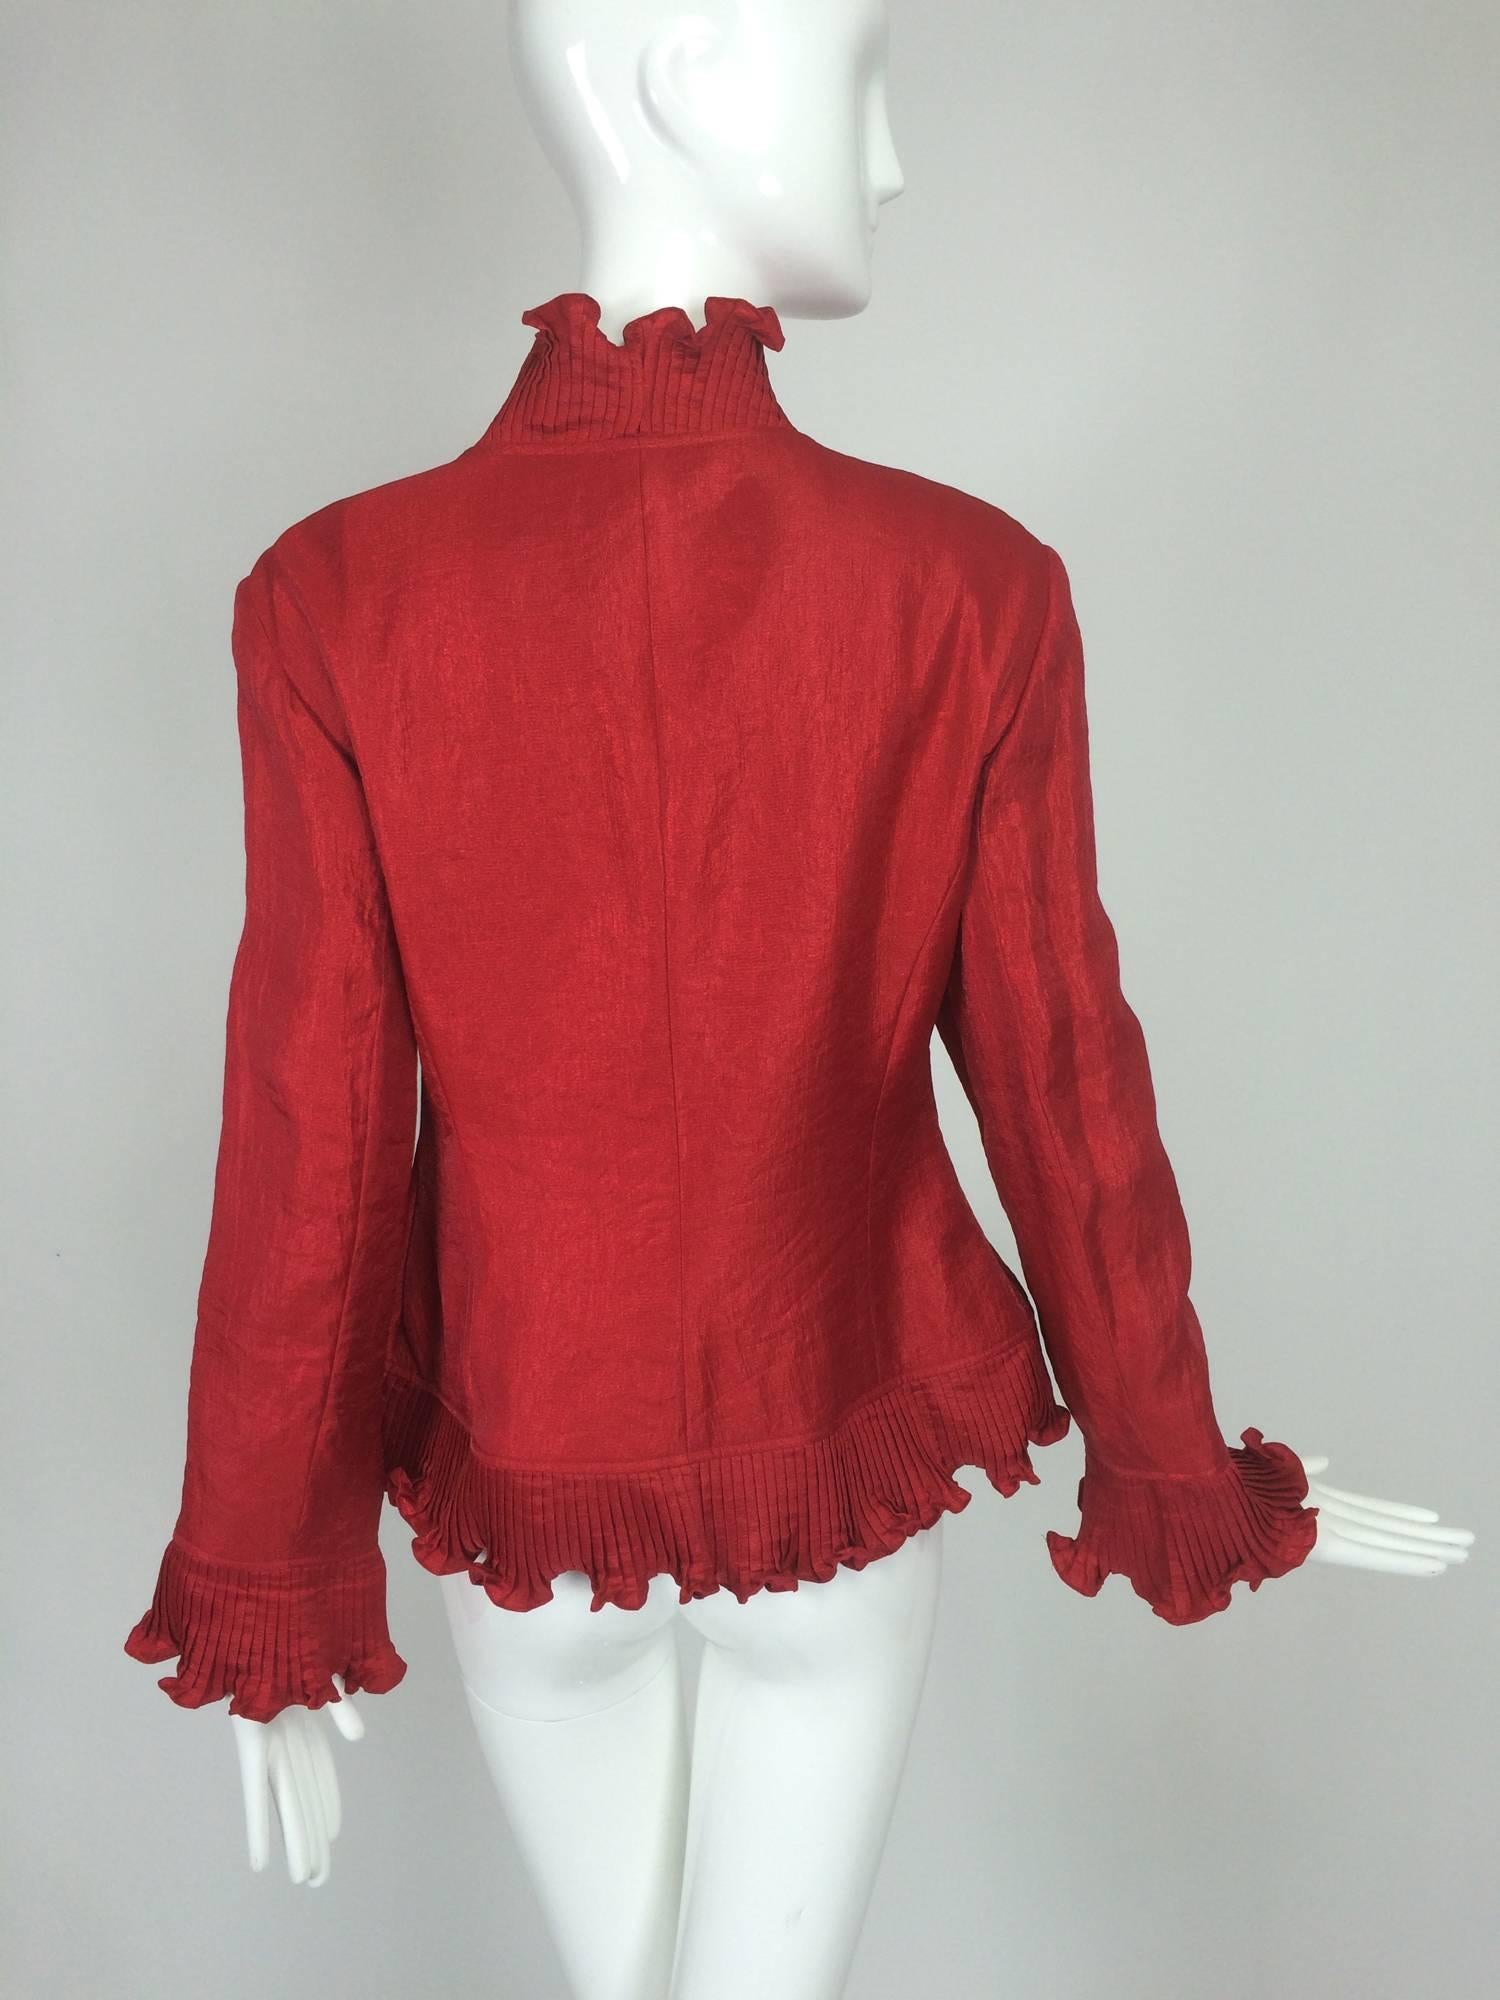 red dressy jacket